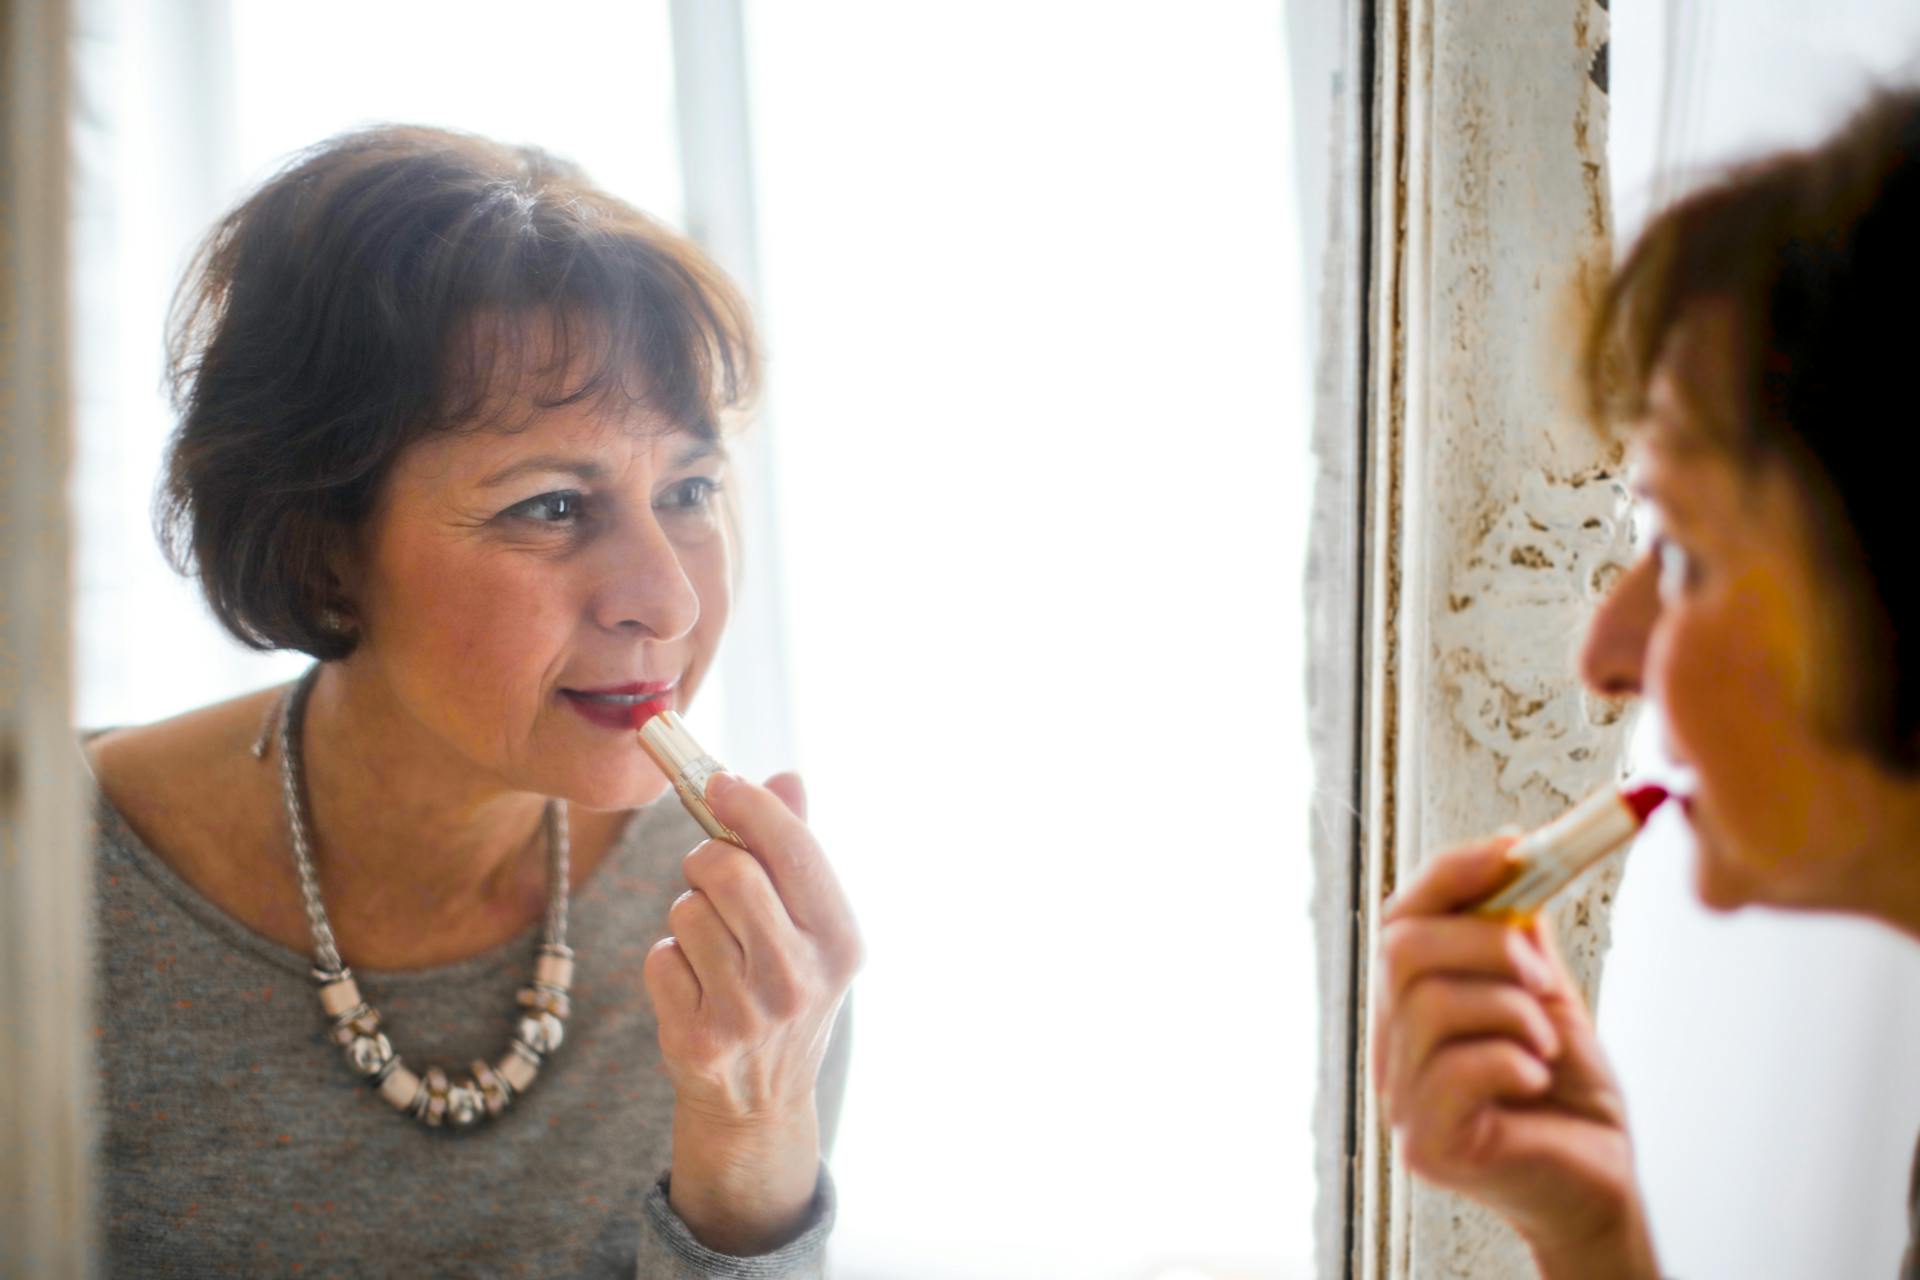 An older woman applying lipstick | Source: Pexels